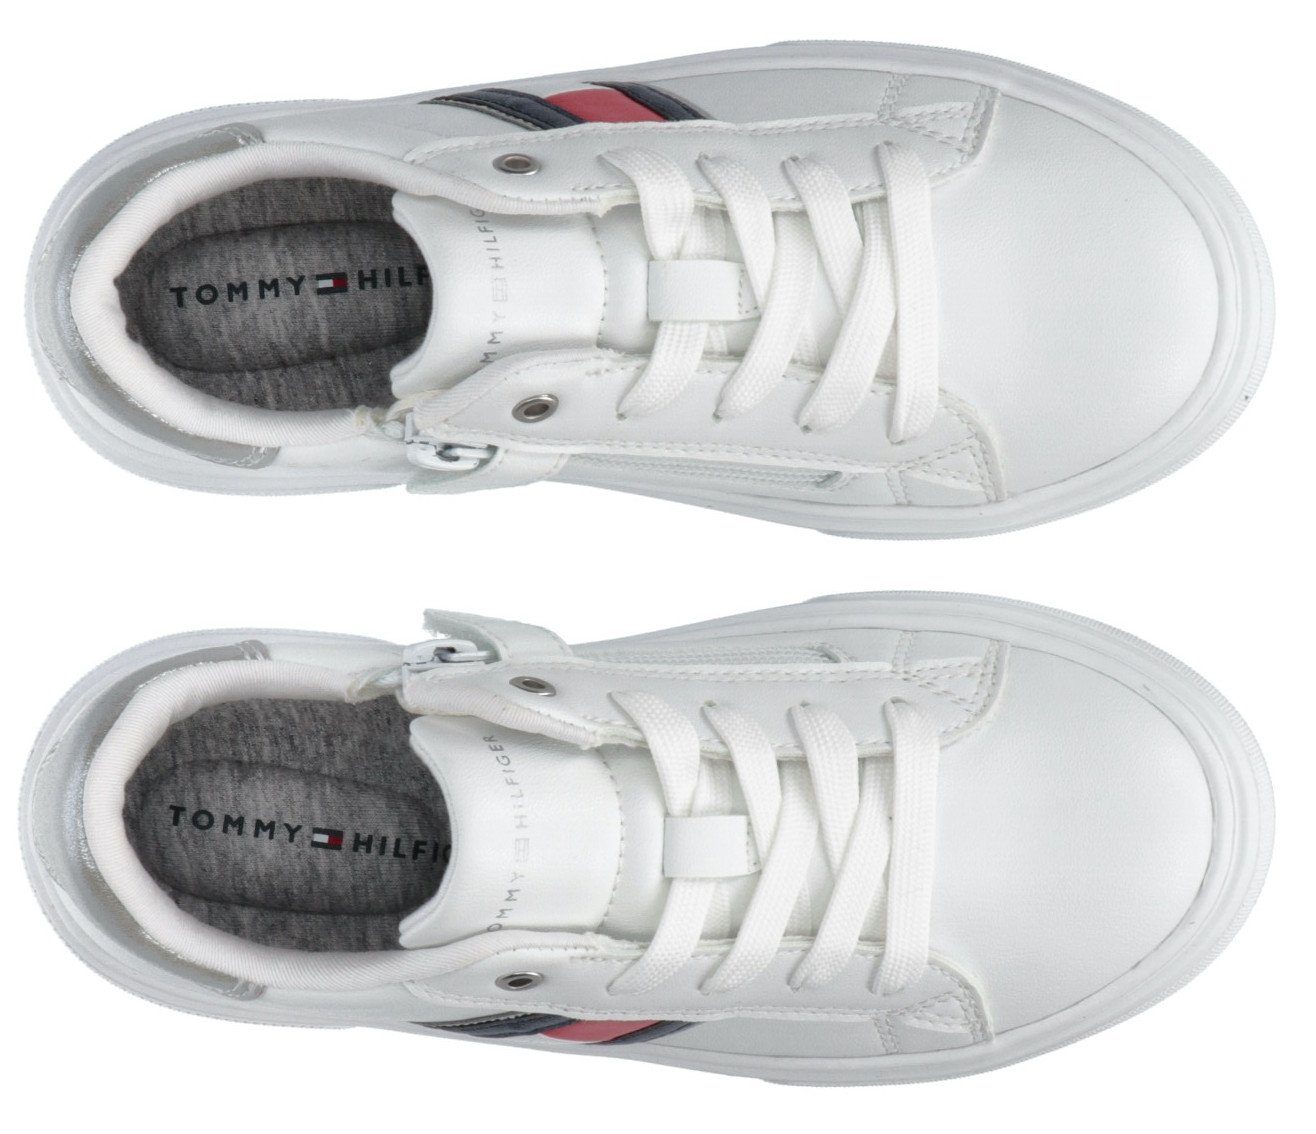 mit Tommy Hilfiger Sneaker weiß-silberfarben LACE-UP FLAG LOW CUT Reißverschluss SNEAKER